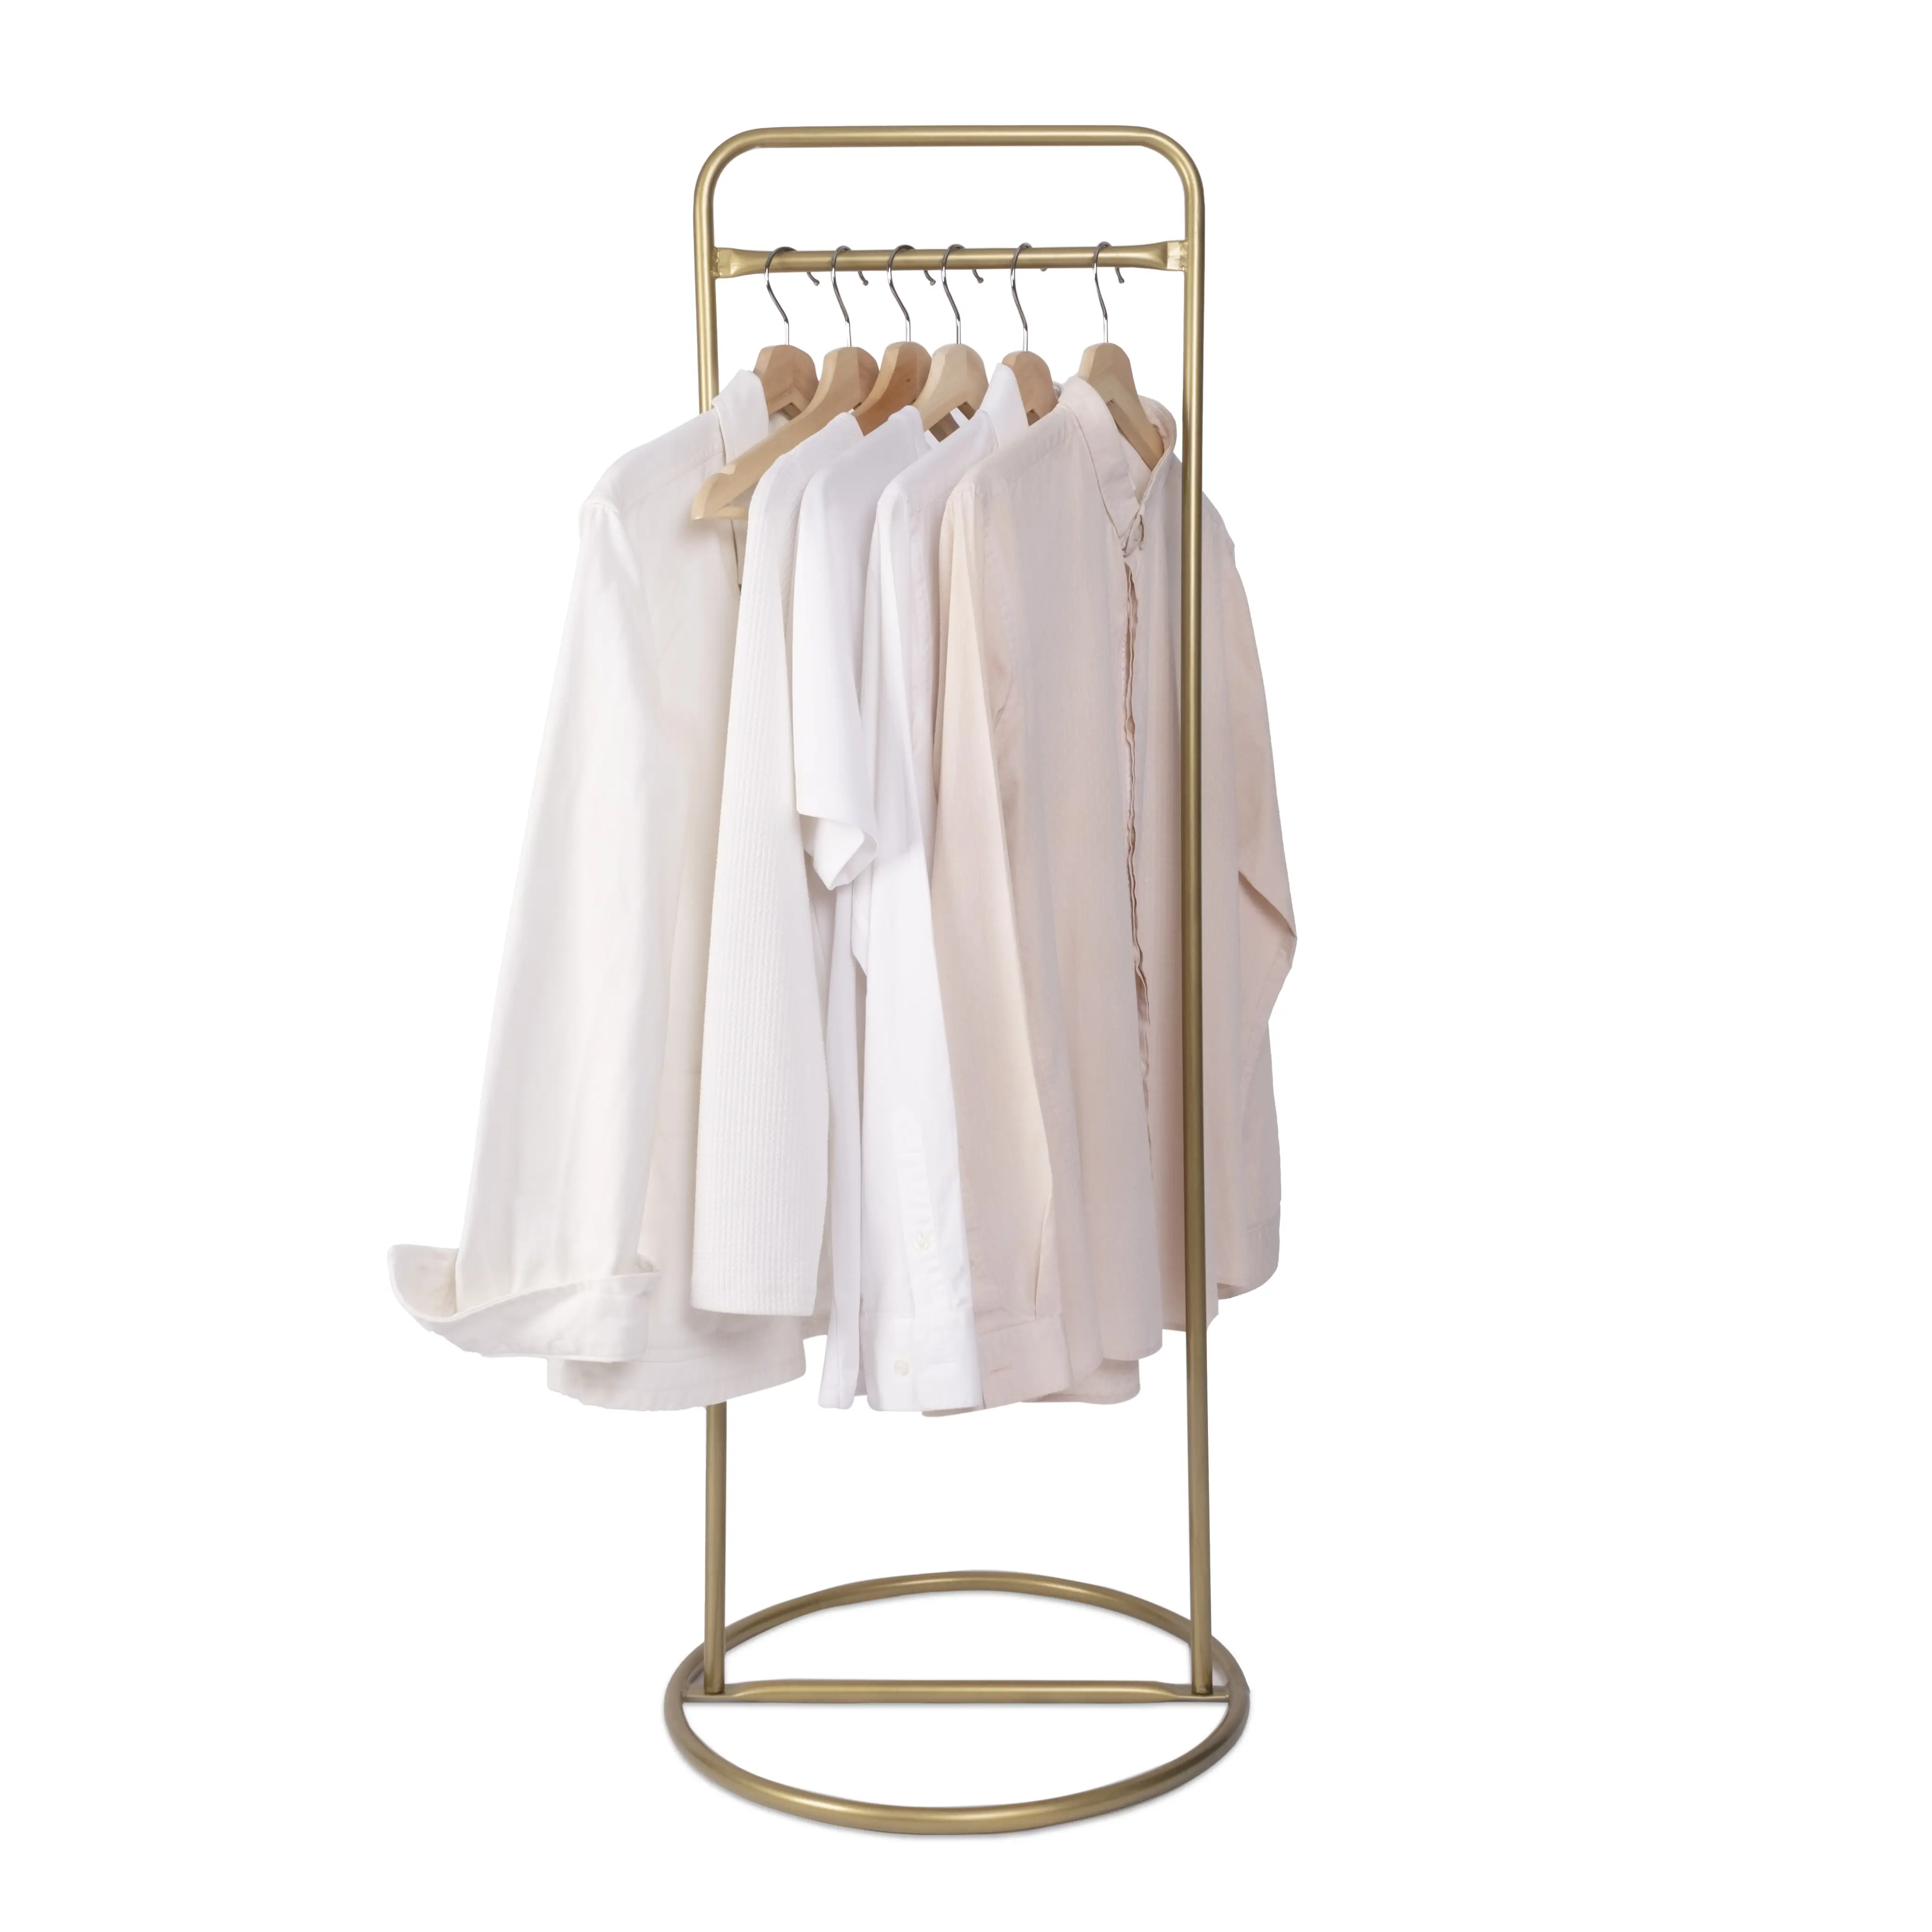 Wholesale price metal pedestal clothes hanger garment clothes hanger drying rack clothes organizer coat rack hange